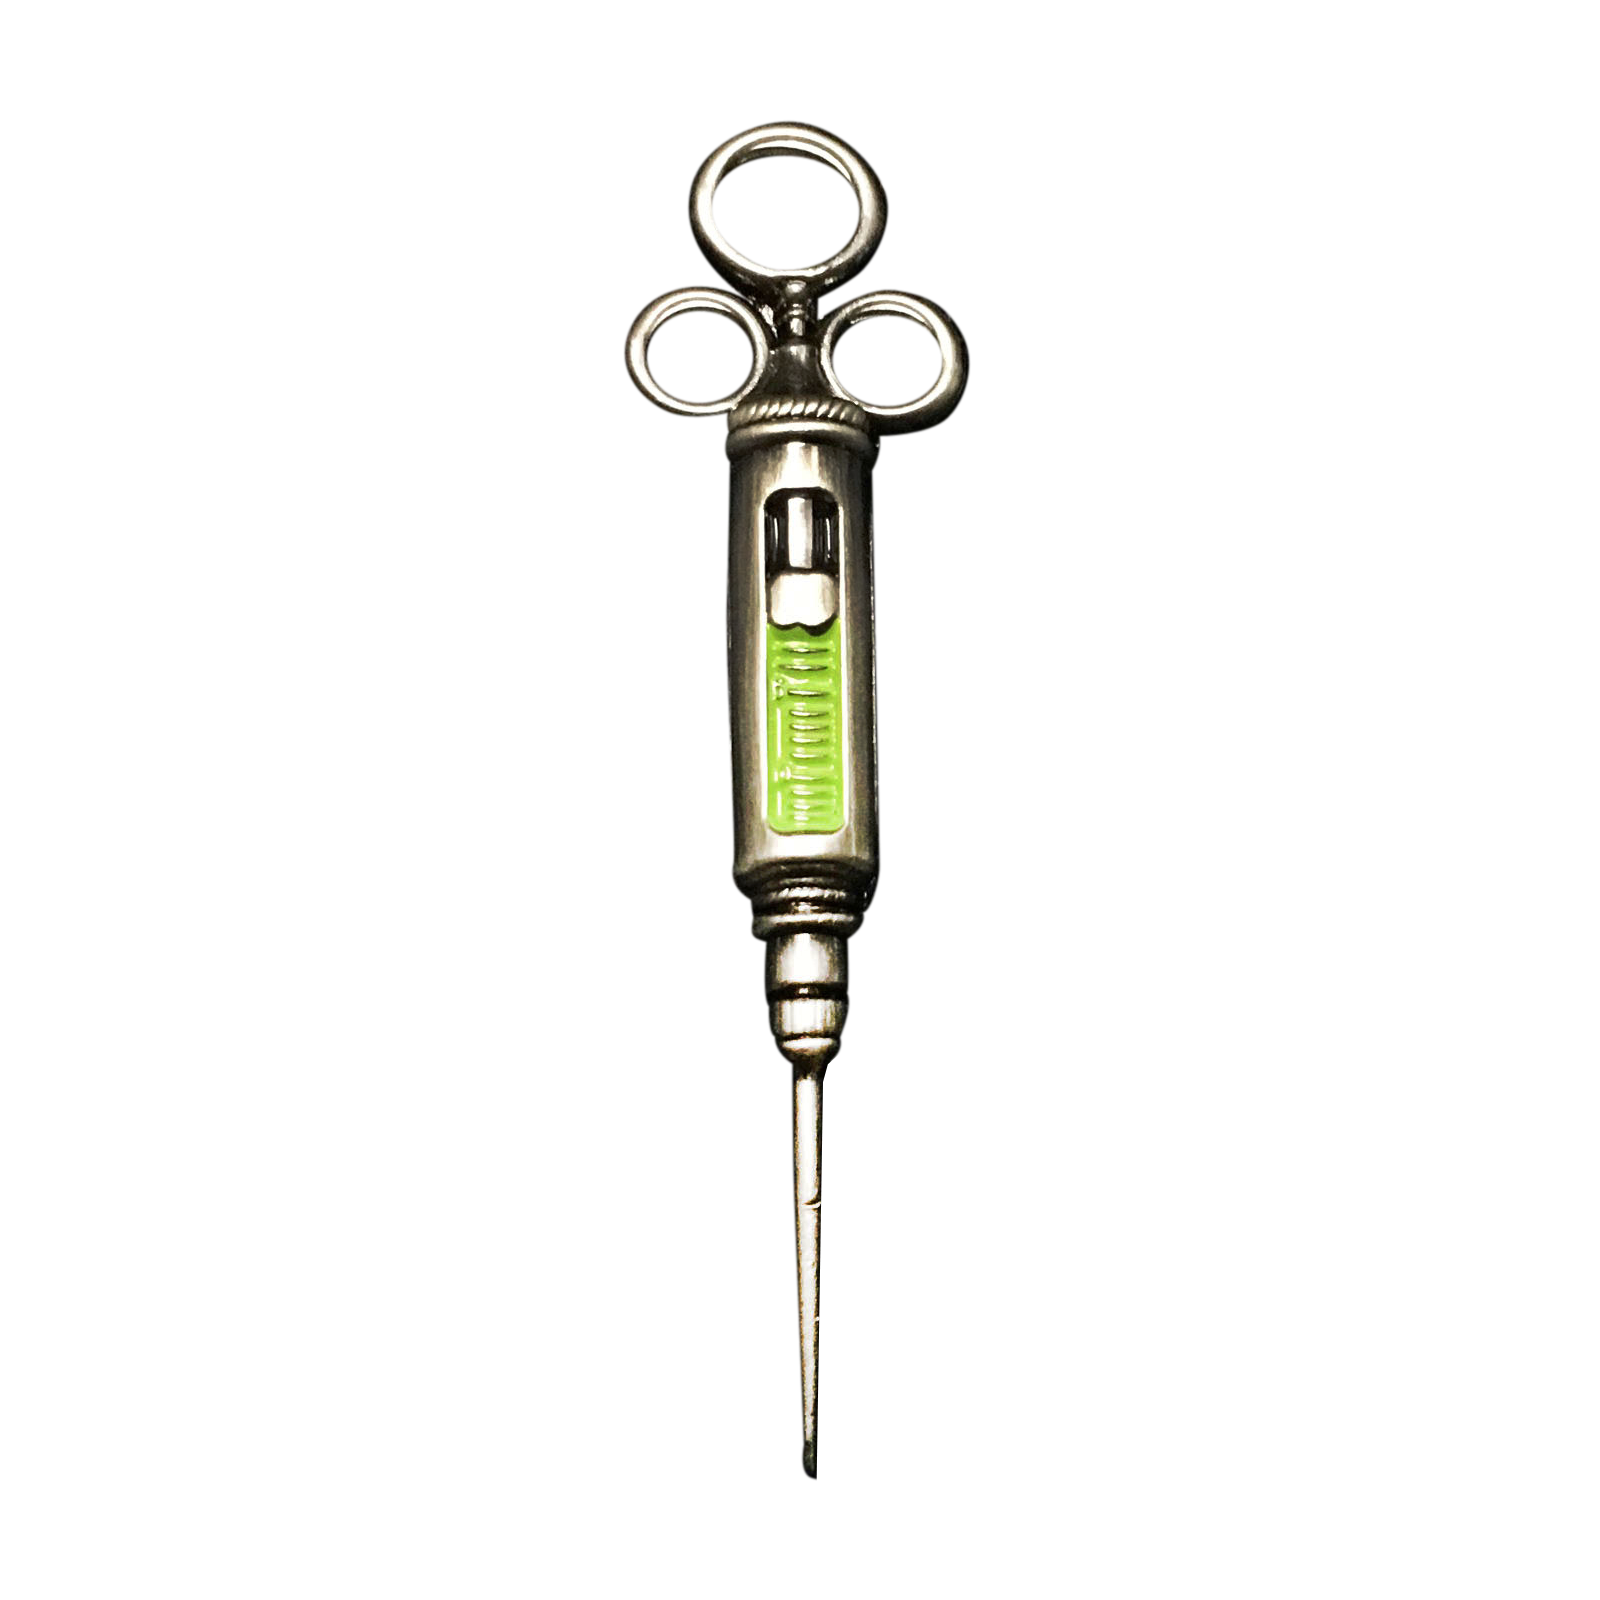 3D Vintage Syringe Pin (Glows in the dark!)